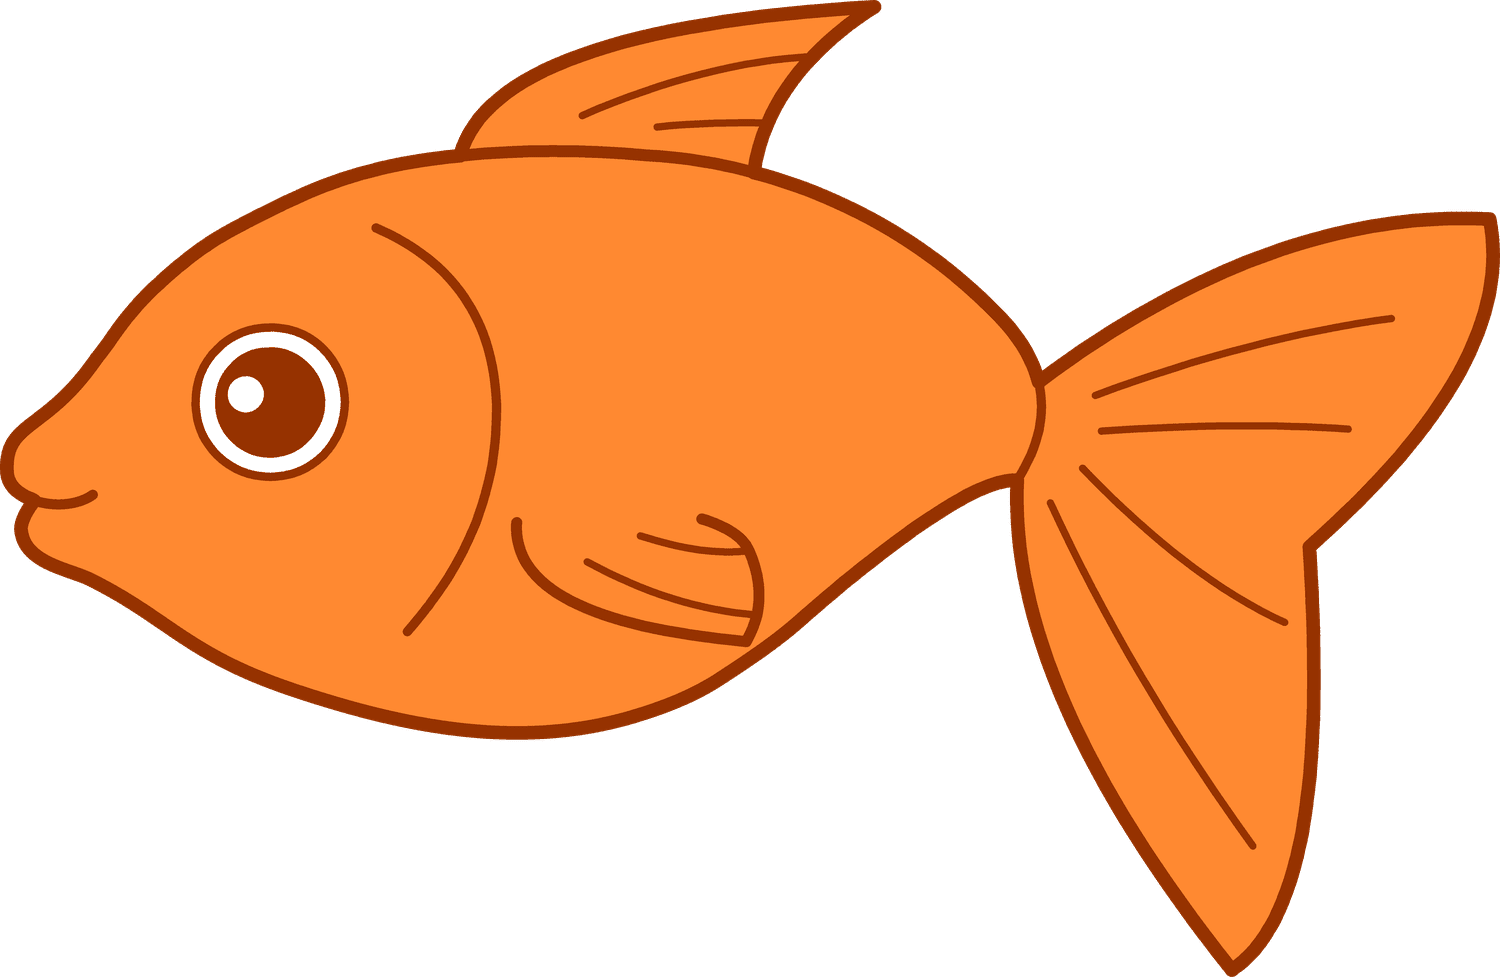 An illustration of an orange fish